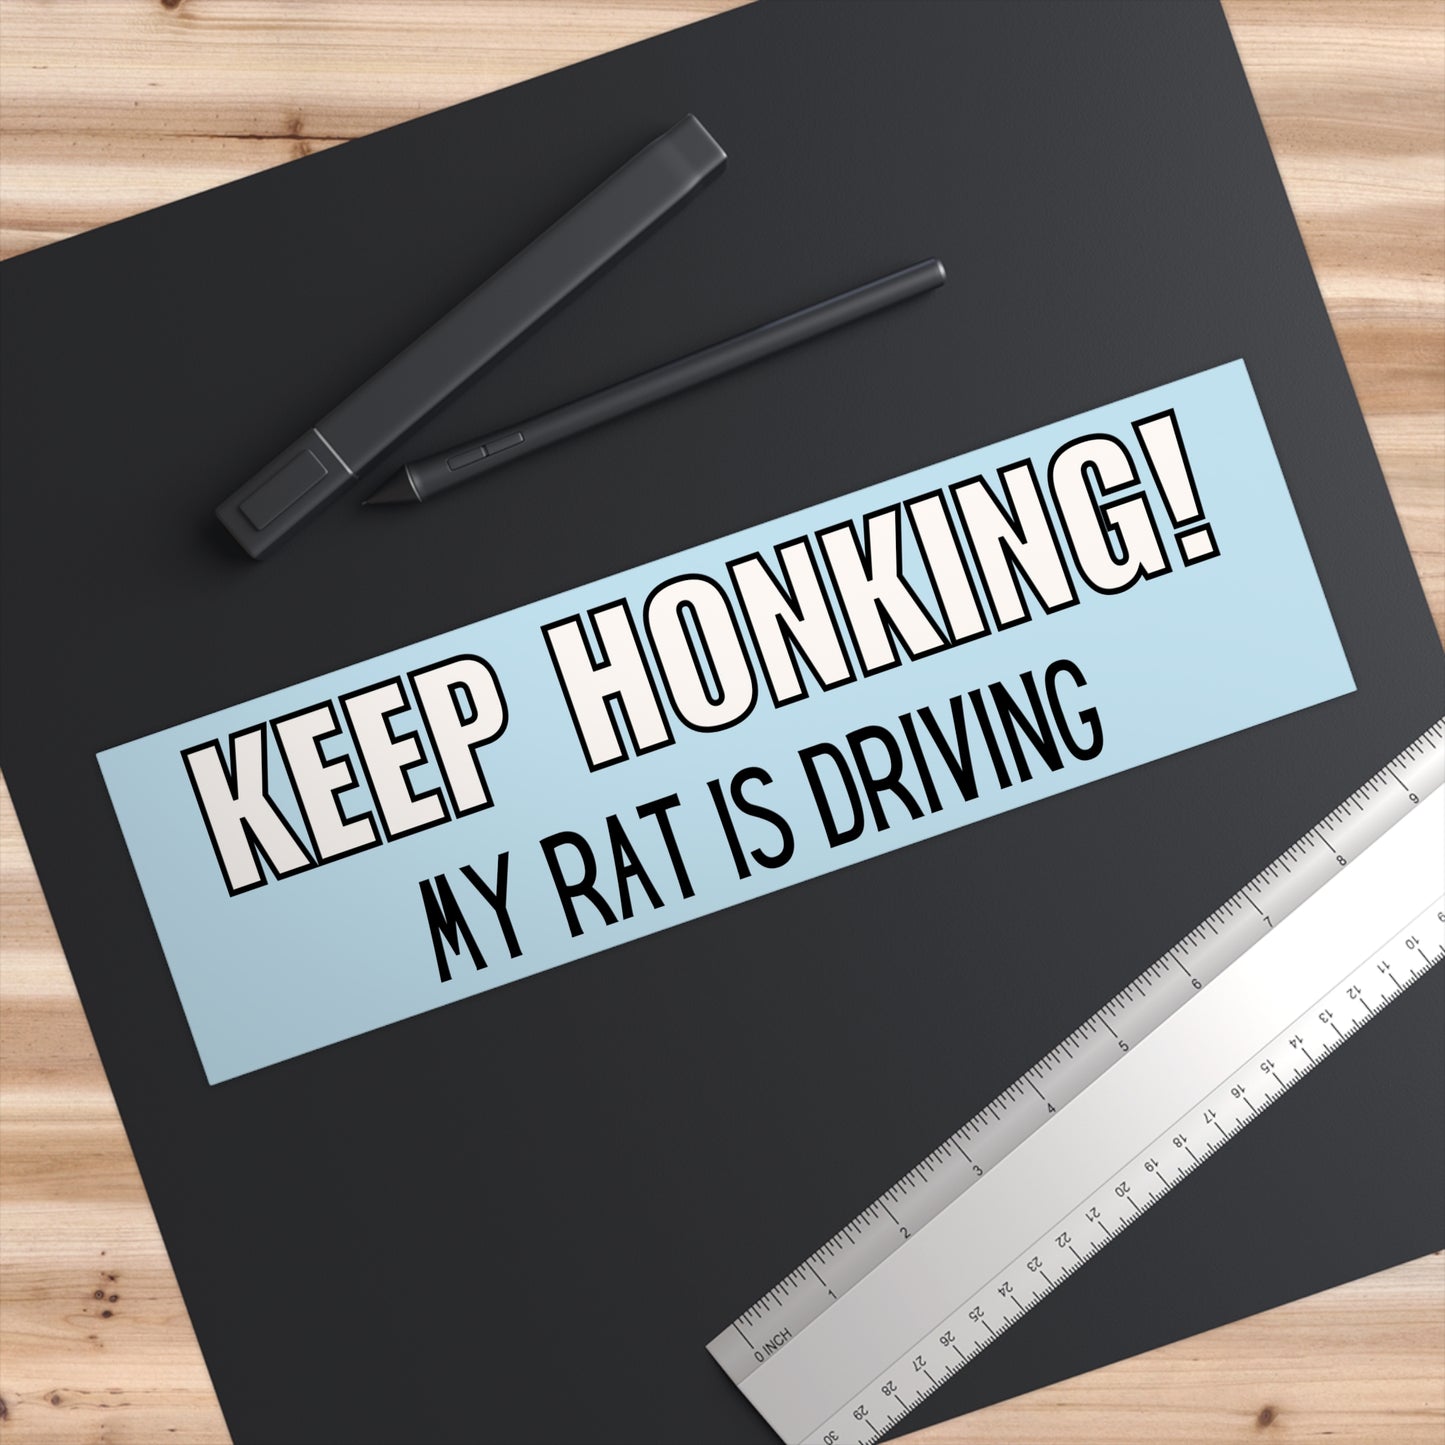 "Keep Honking! My rat is driving" Bumper Sticker